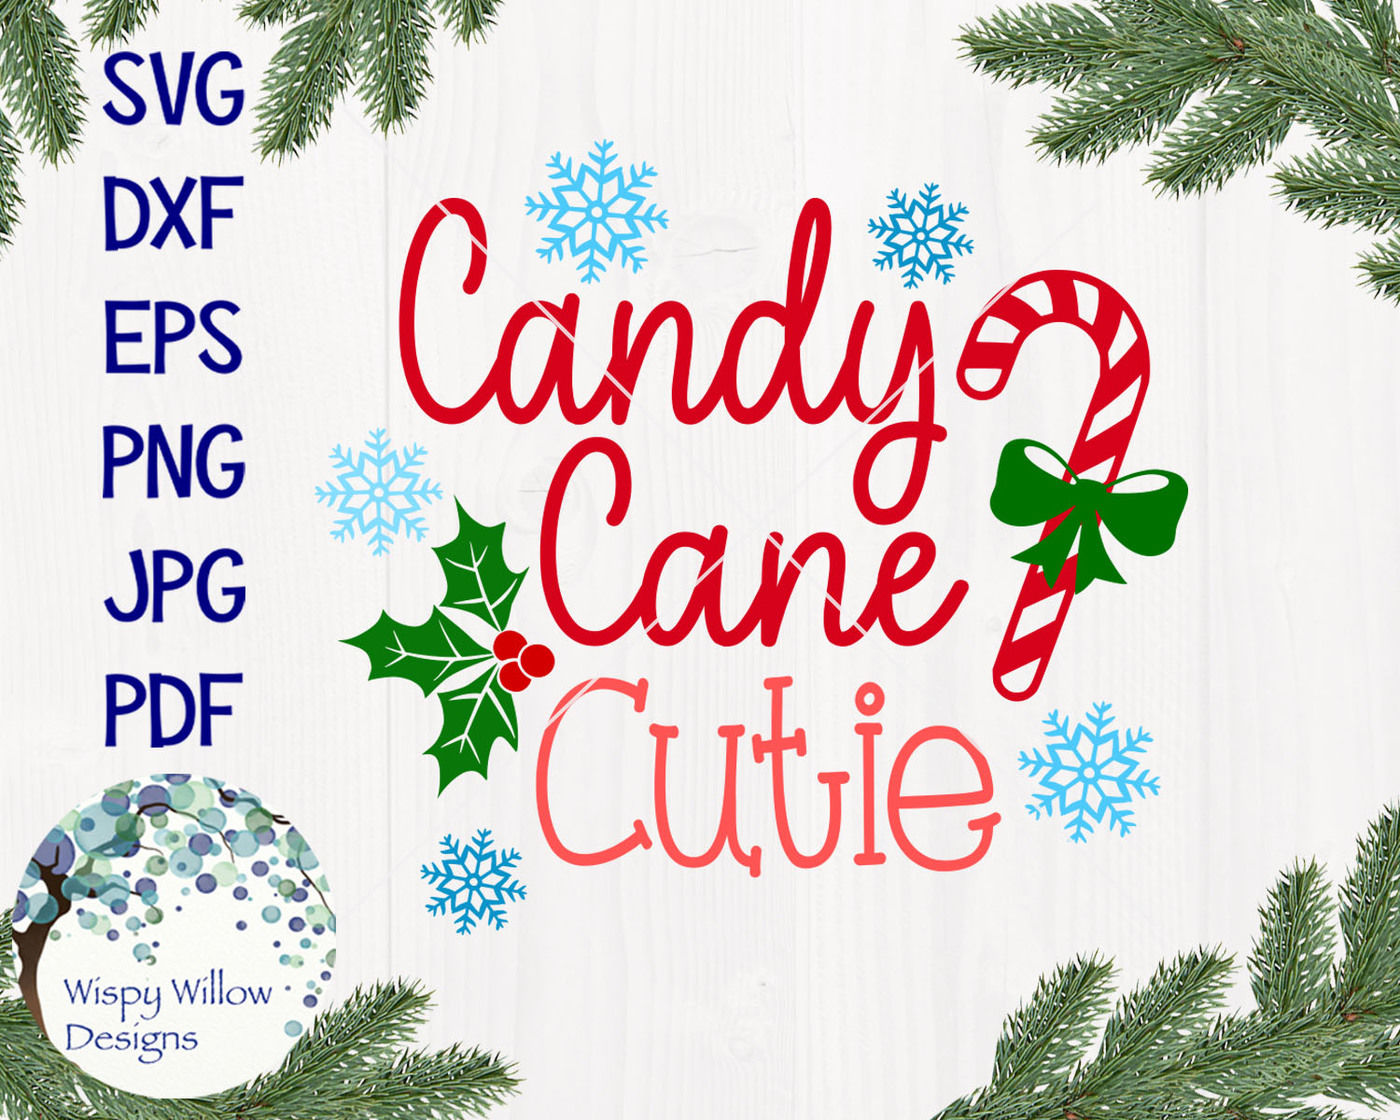 Candy Cane Cutie Svg By Wispy Willow Designs Thehungryjpeg Com